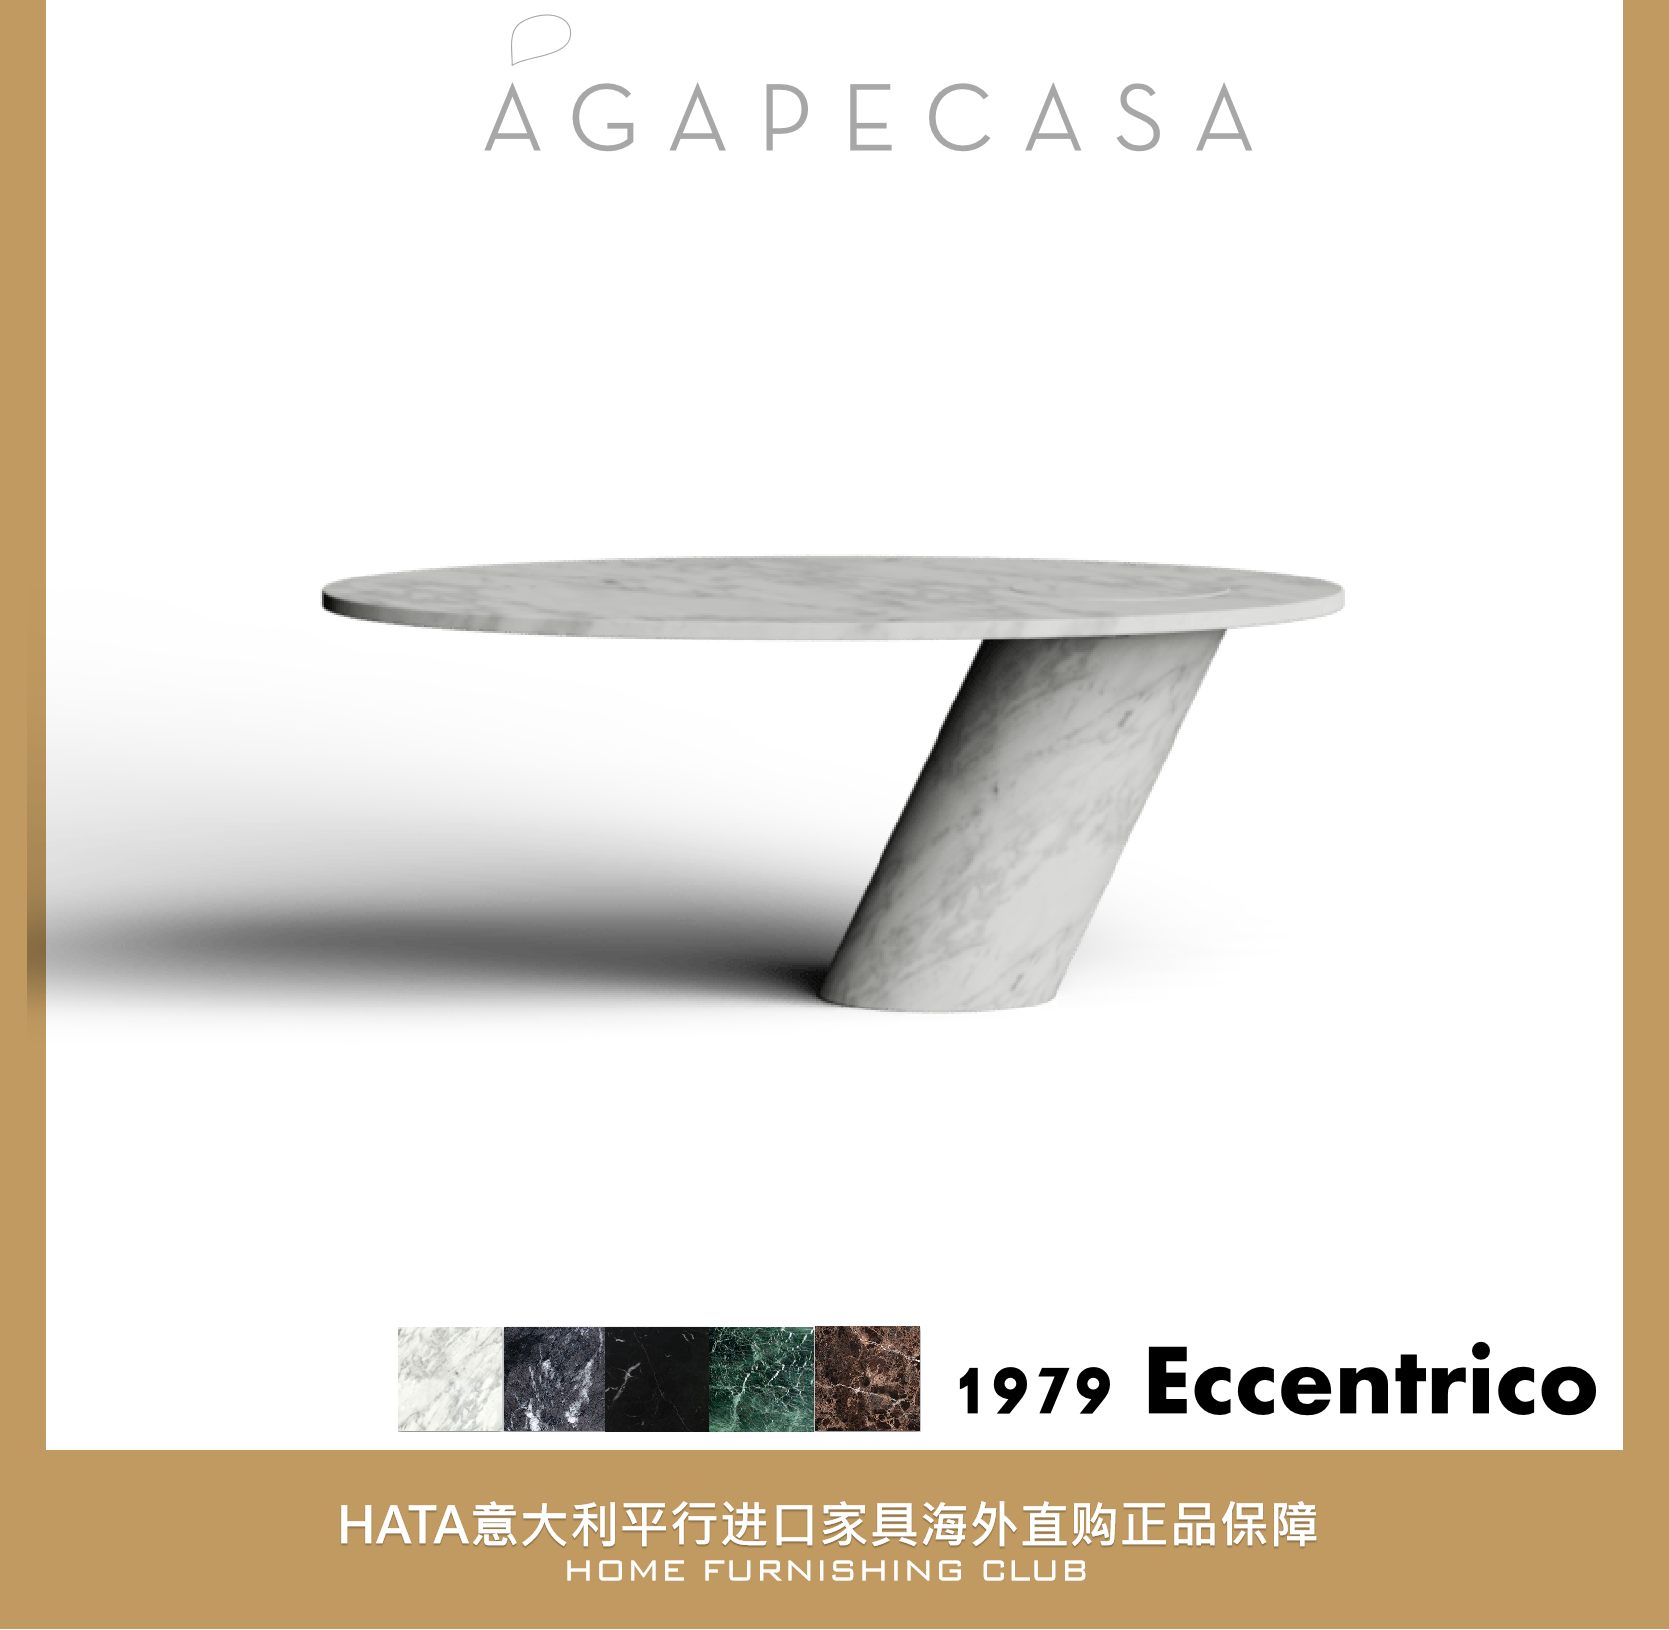 agapecasa 大理石椭圆形餐桌 意大利进口家具代购1979 Eccentrico